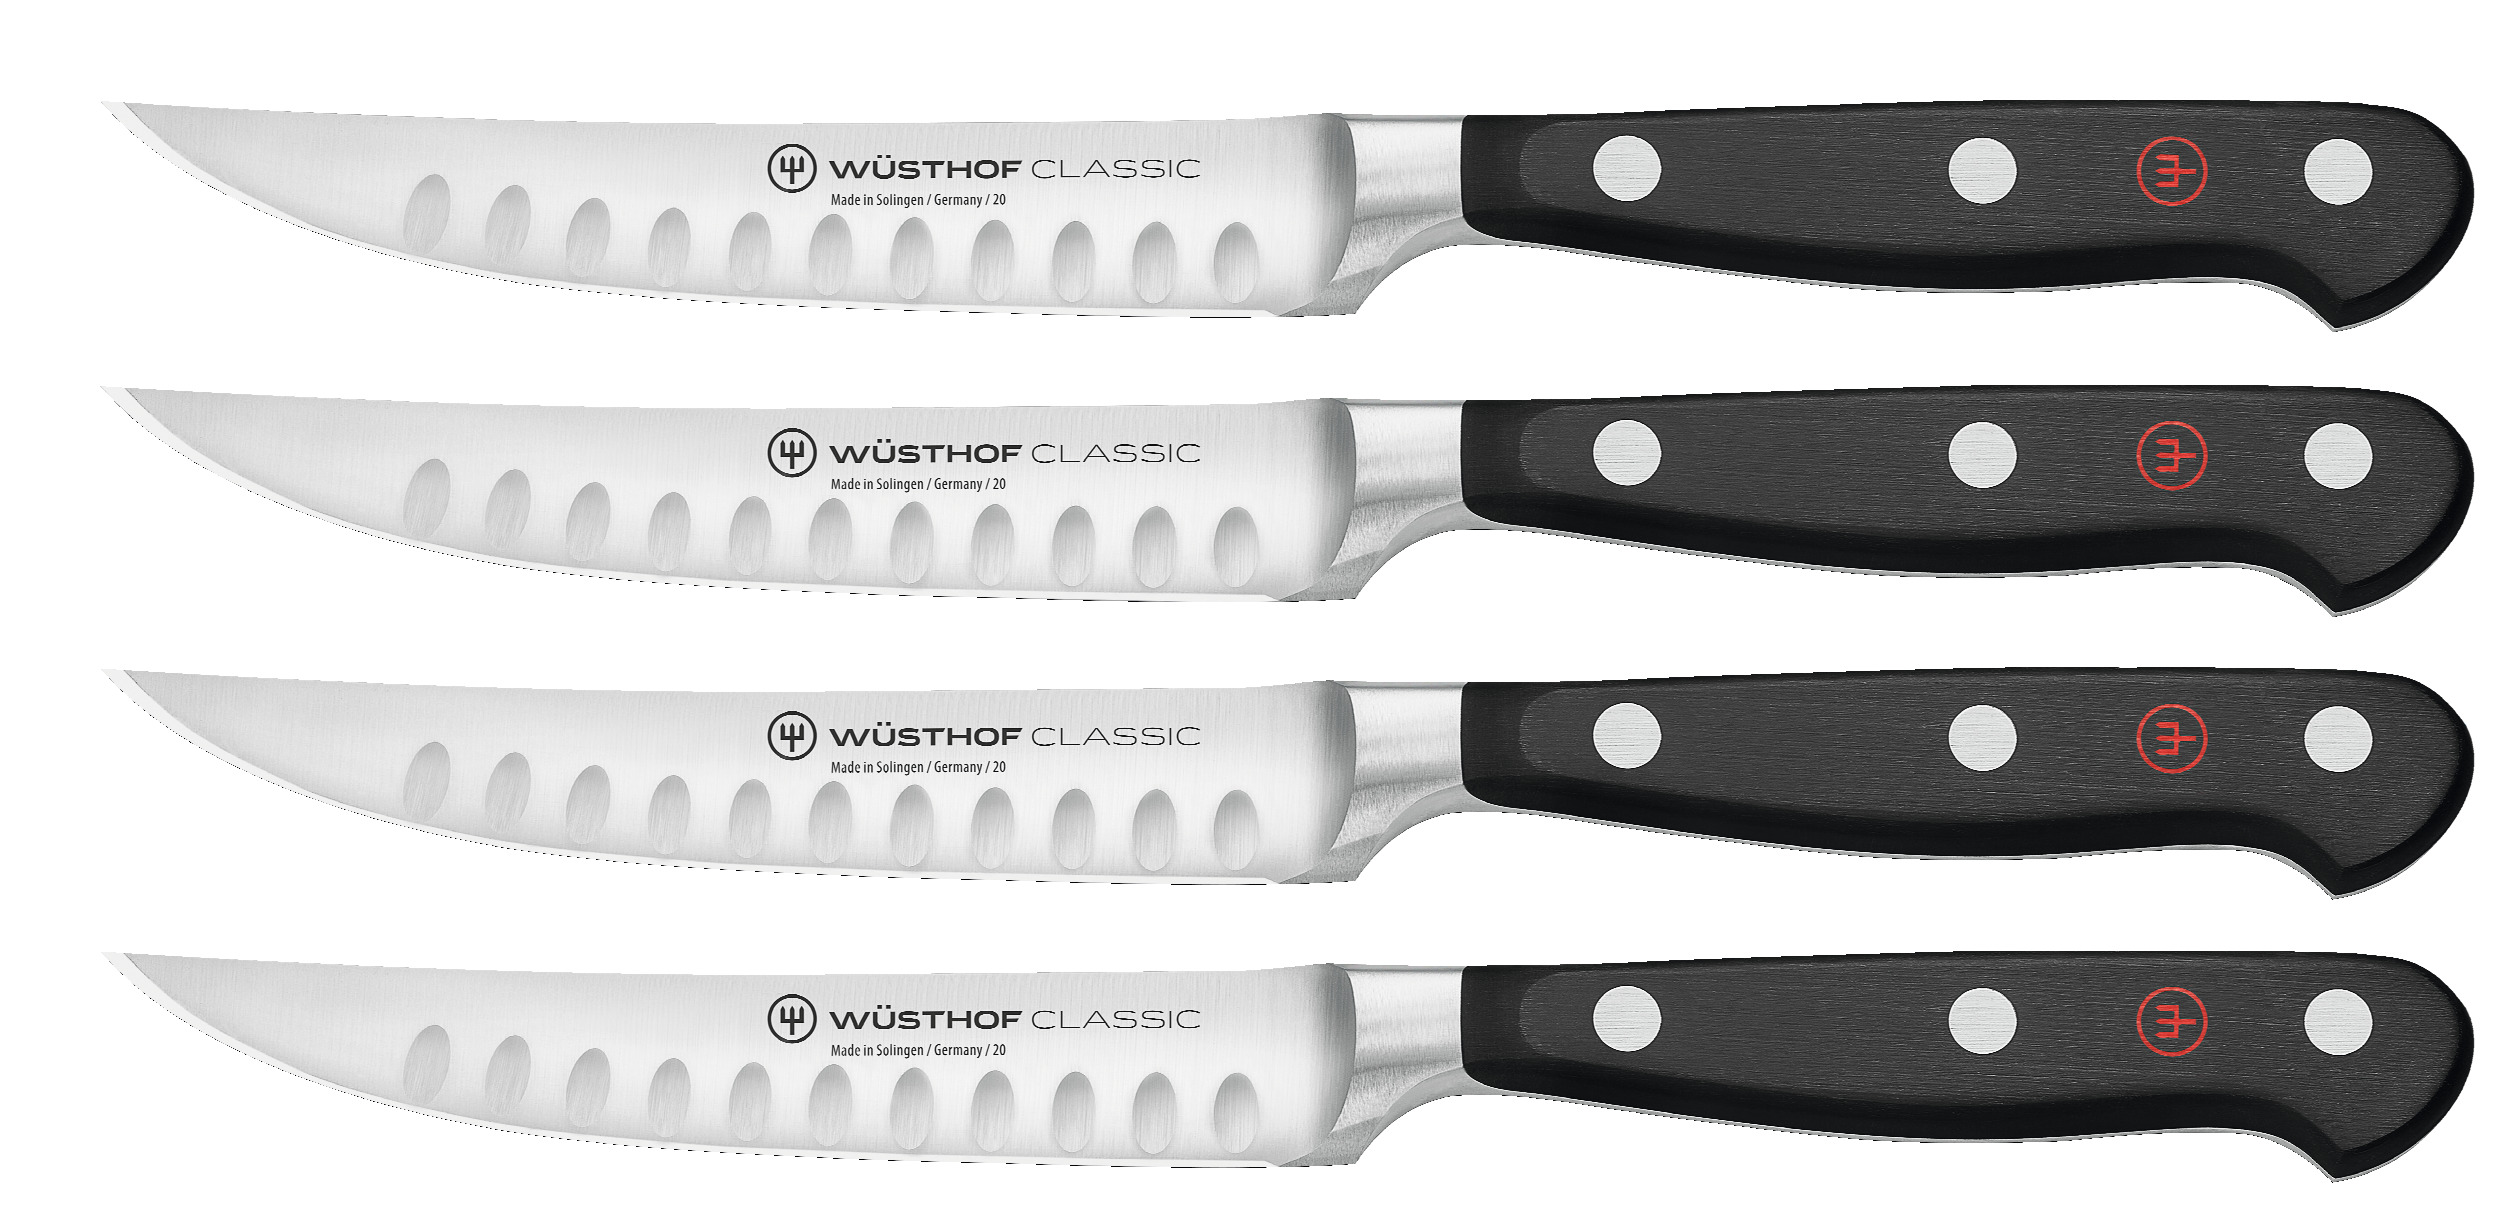 Wusthof Classic 4 Piece Steak Knife Set